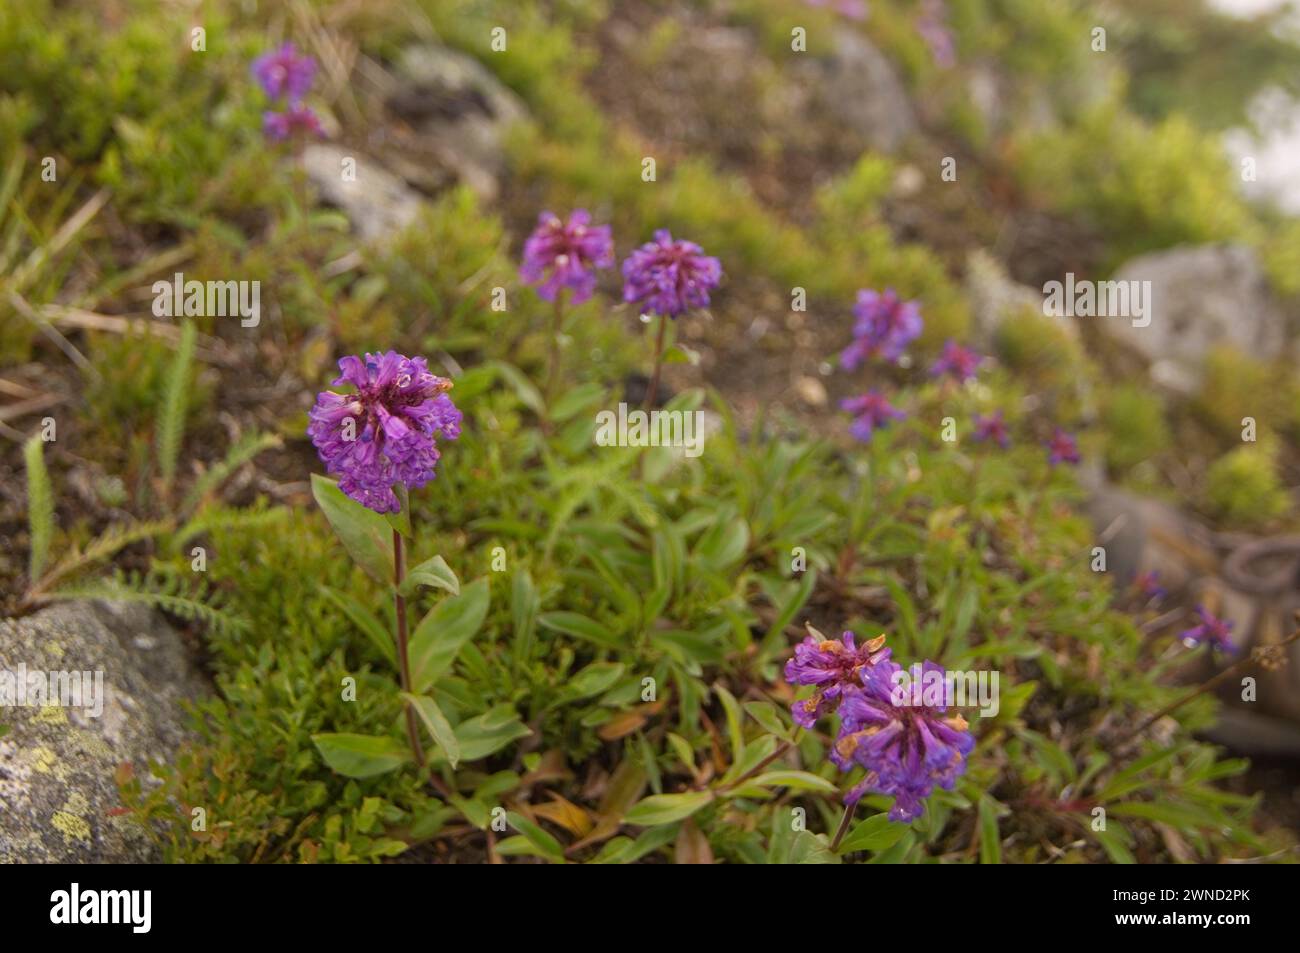 USA, Washington, Cascade Range, Mount Baker-Snoqualmie National Forest, Bandera Mountain. Small-flowered penstemon (Penstemon procerus) in bloom. Stock Photo